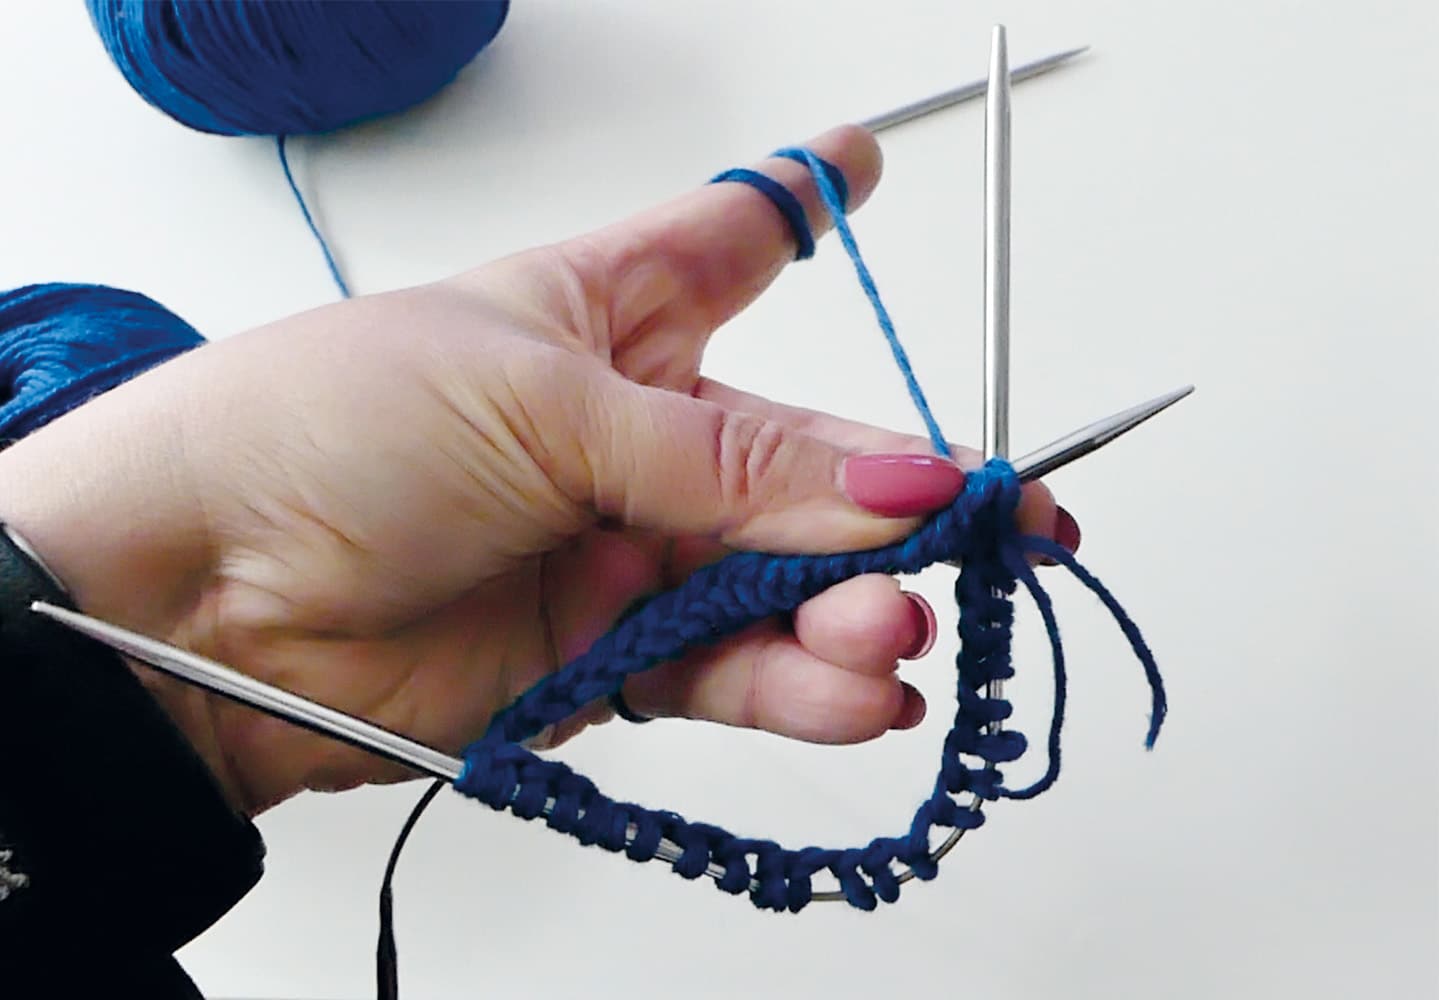 addiCraSyTrioLONG 03 4c Beanie Hat knitting,Beanie knitting tutorial,Beanie knitting addiCraSyTrio,Trio Beanie knitting,Beanie knitting for beginners